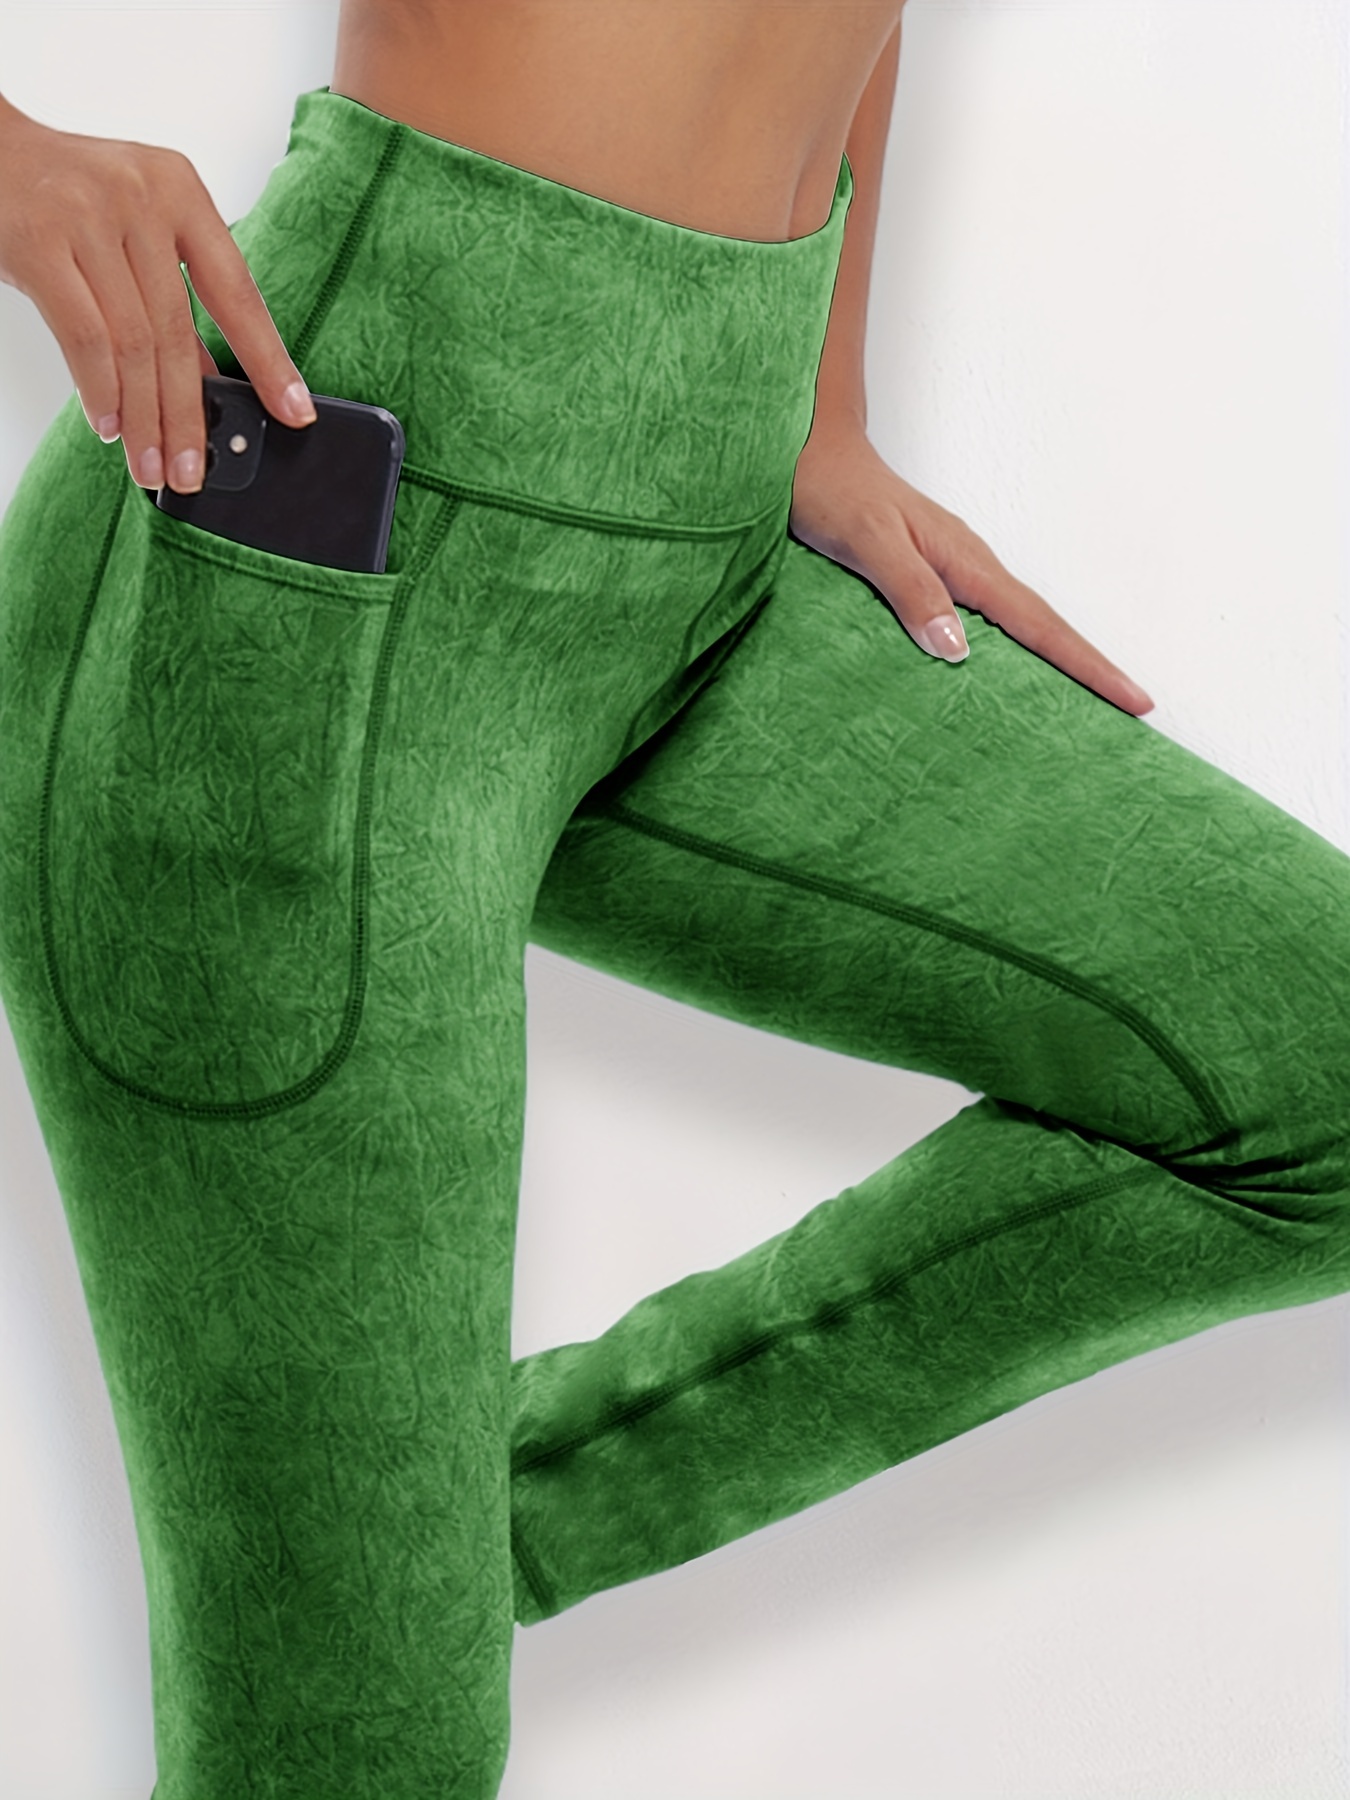 MRULIC yoga pants Women High-Waisted Skinny Leggings Sport Push Up Yoga  Pants Green + S 